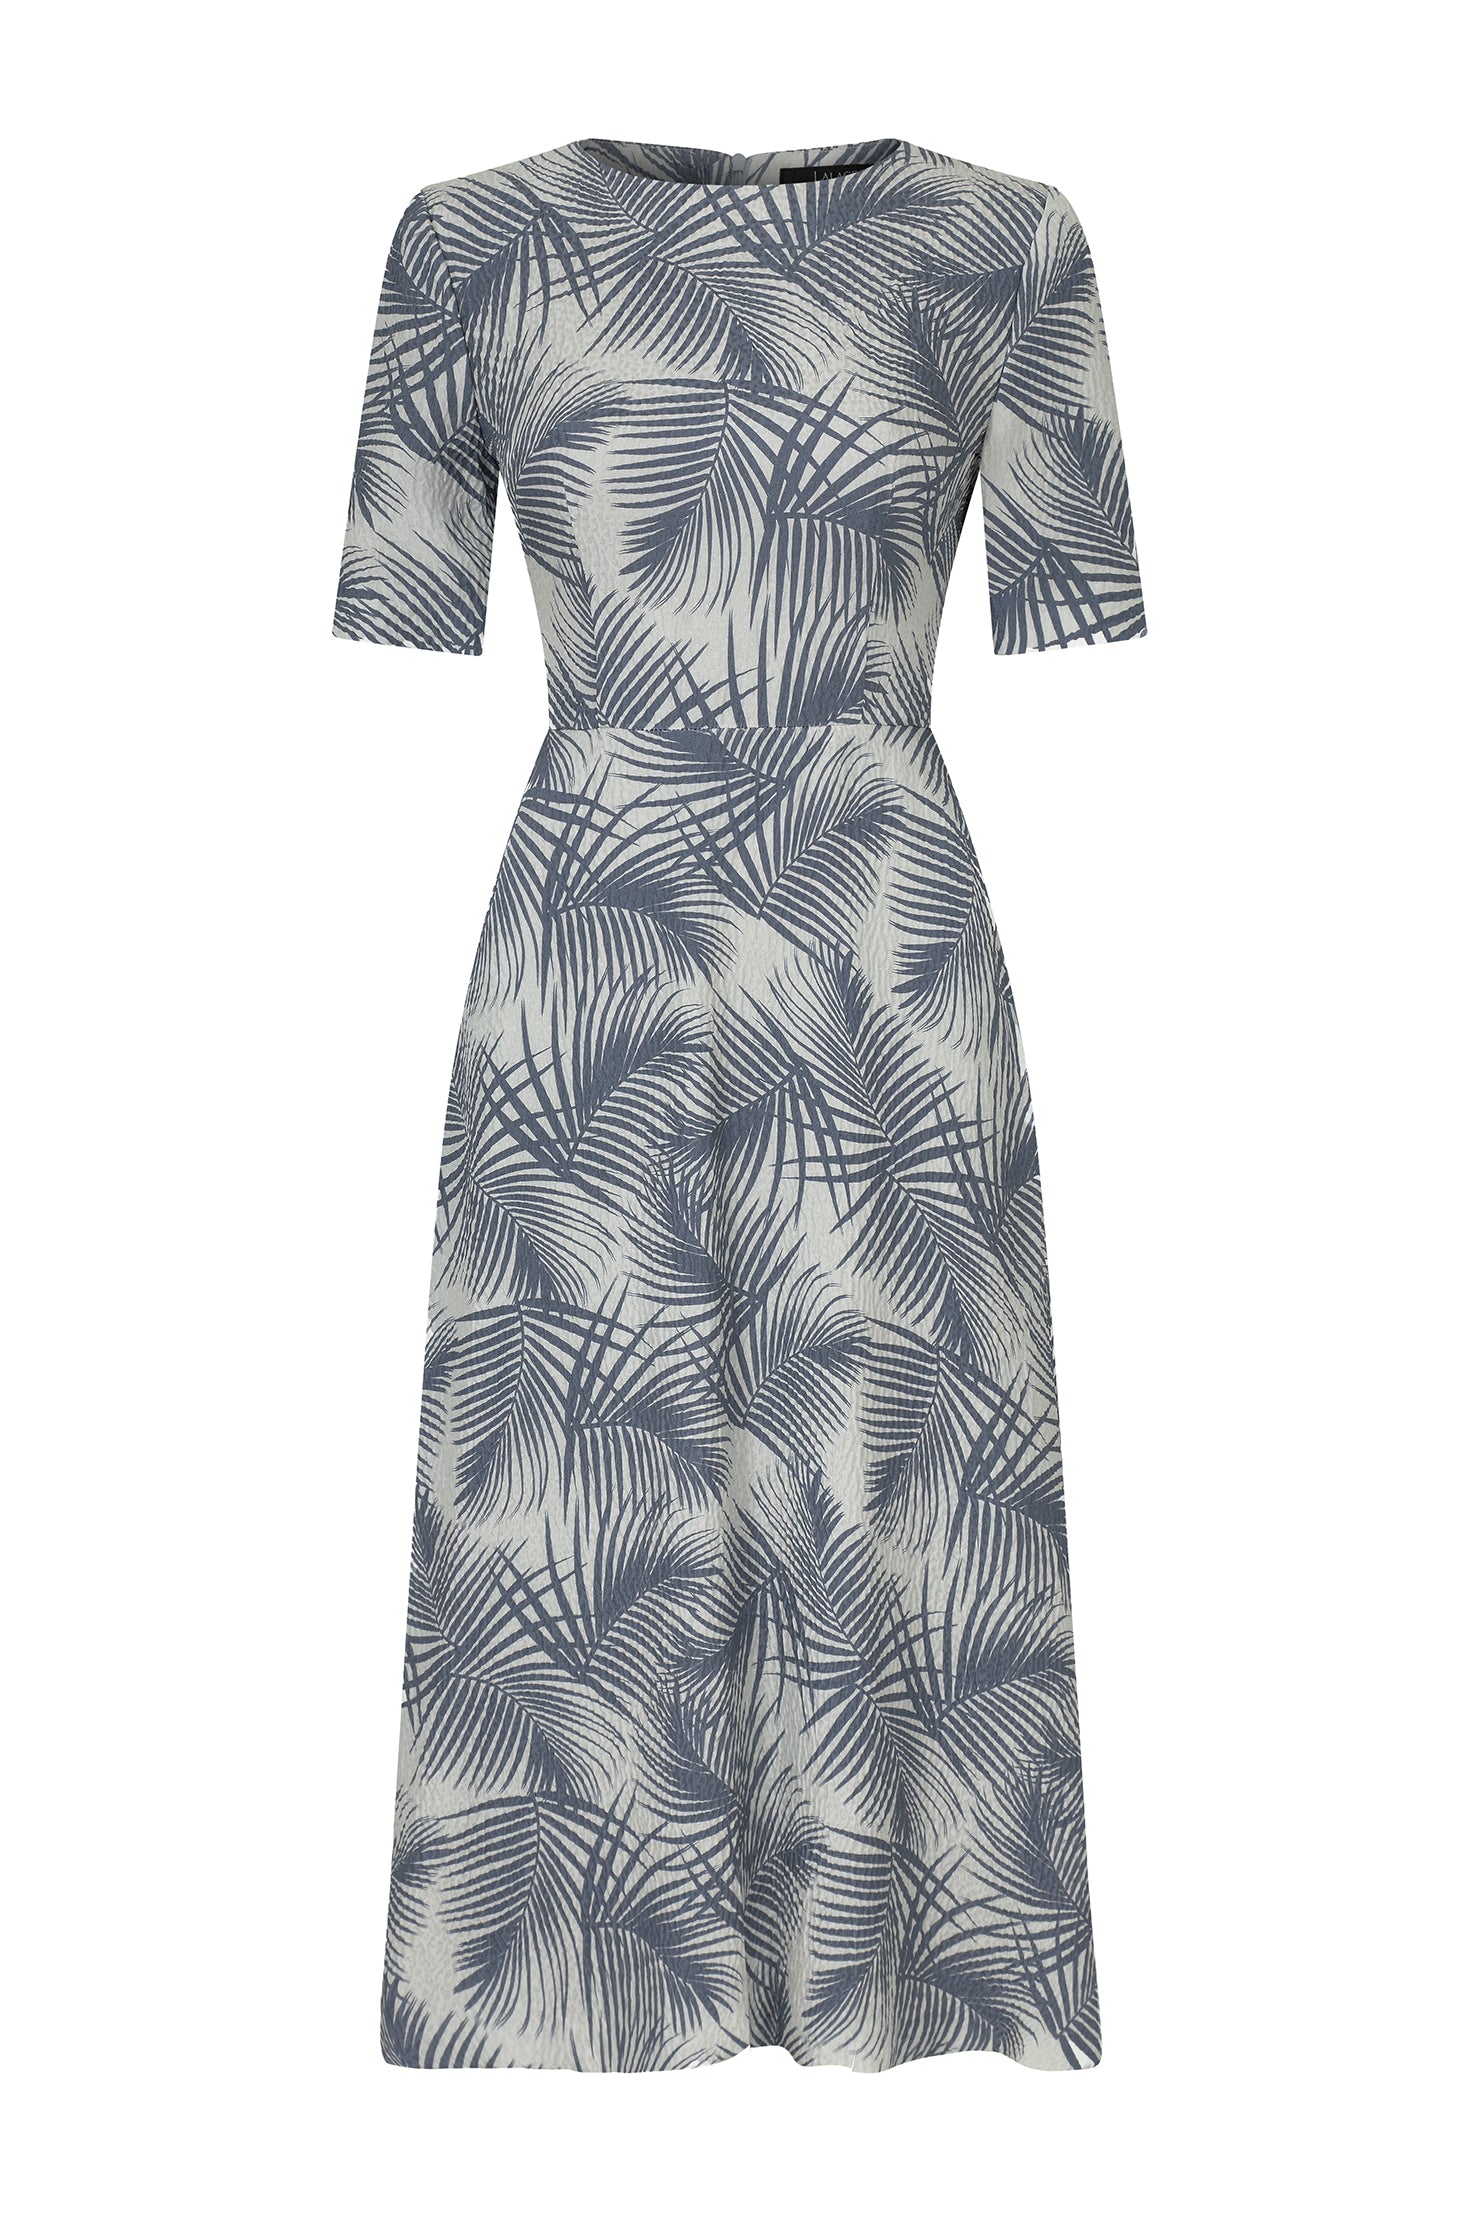 Midi Length Dress with Sleeves in Stone and Slate Italian Printed Silk Cloqué - Lexie